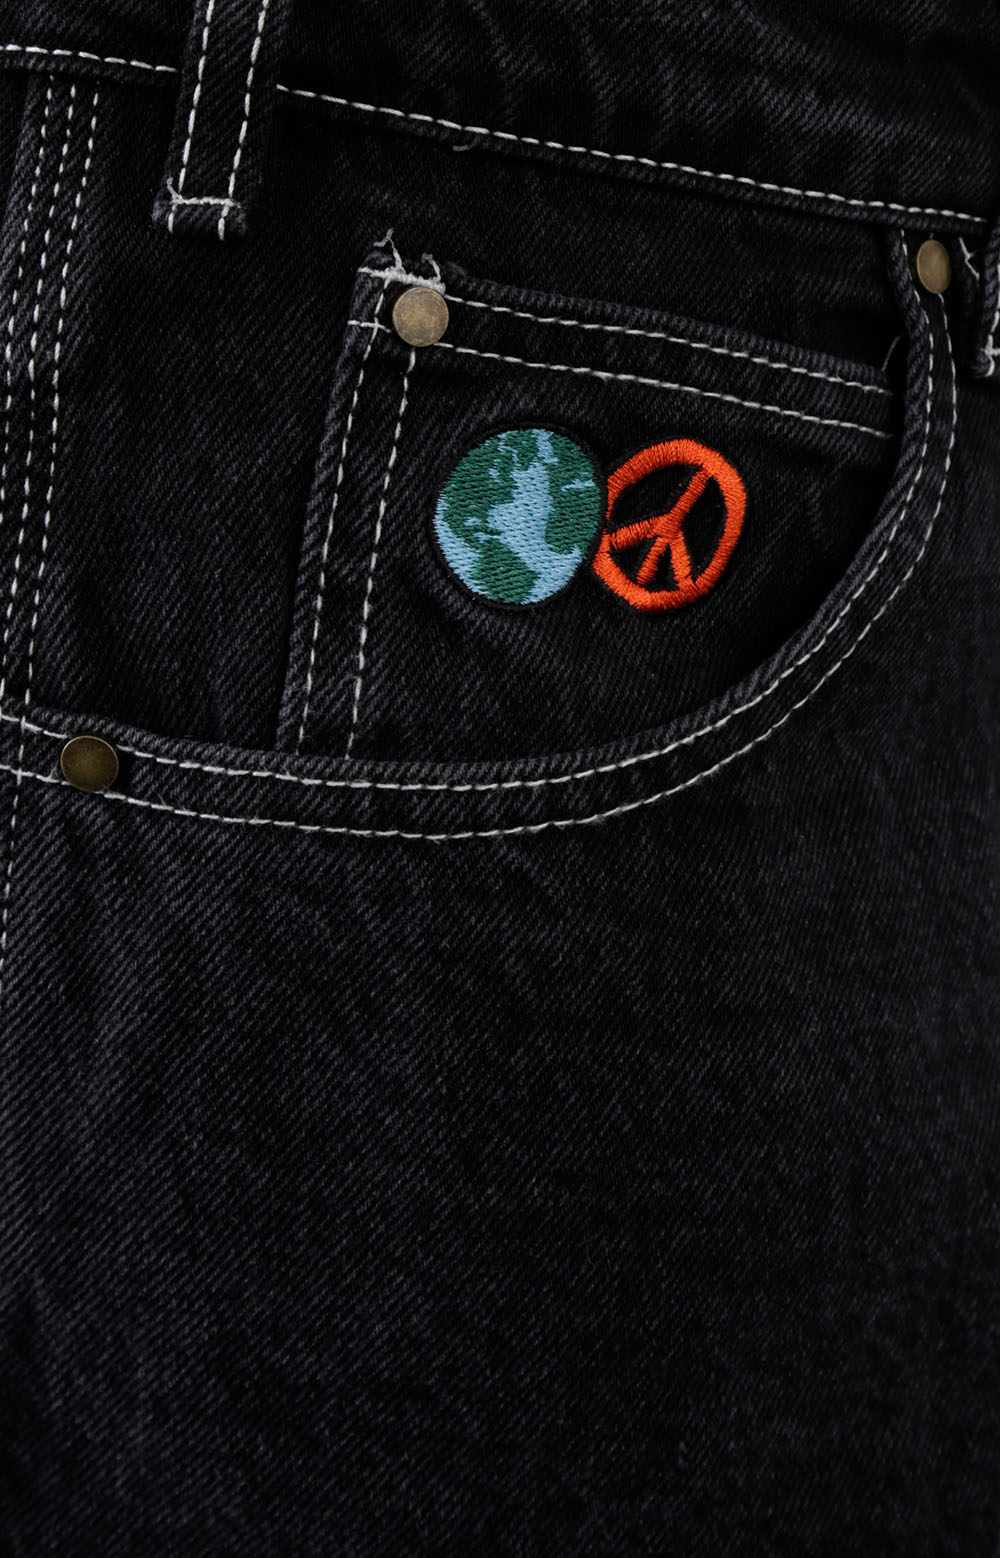 World Peace Denim Jeans - Washed Black